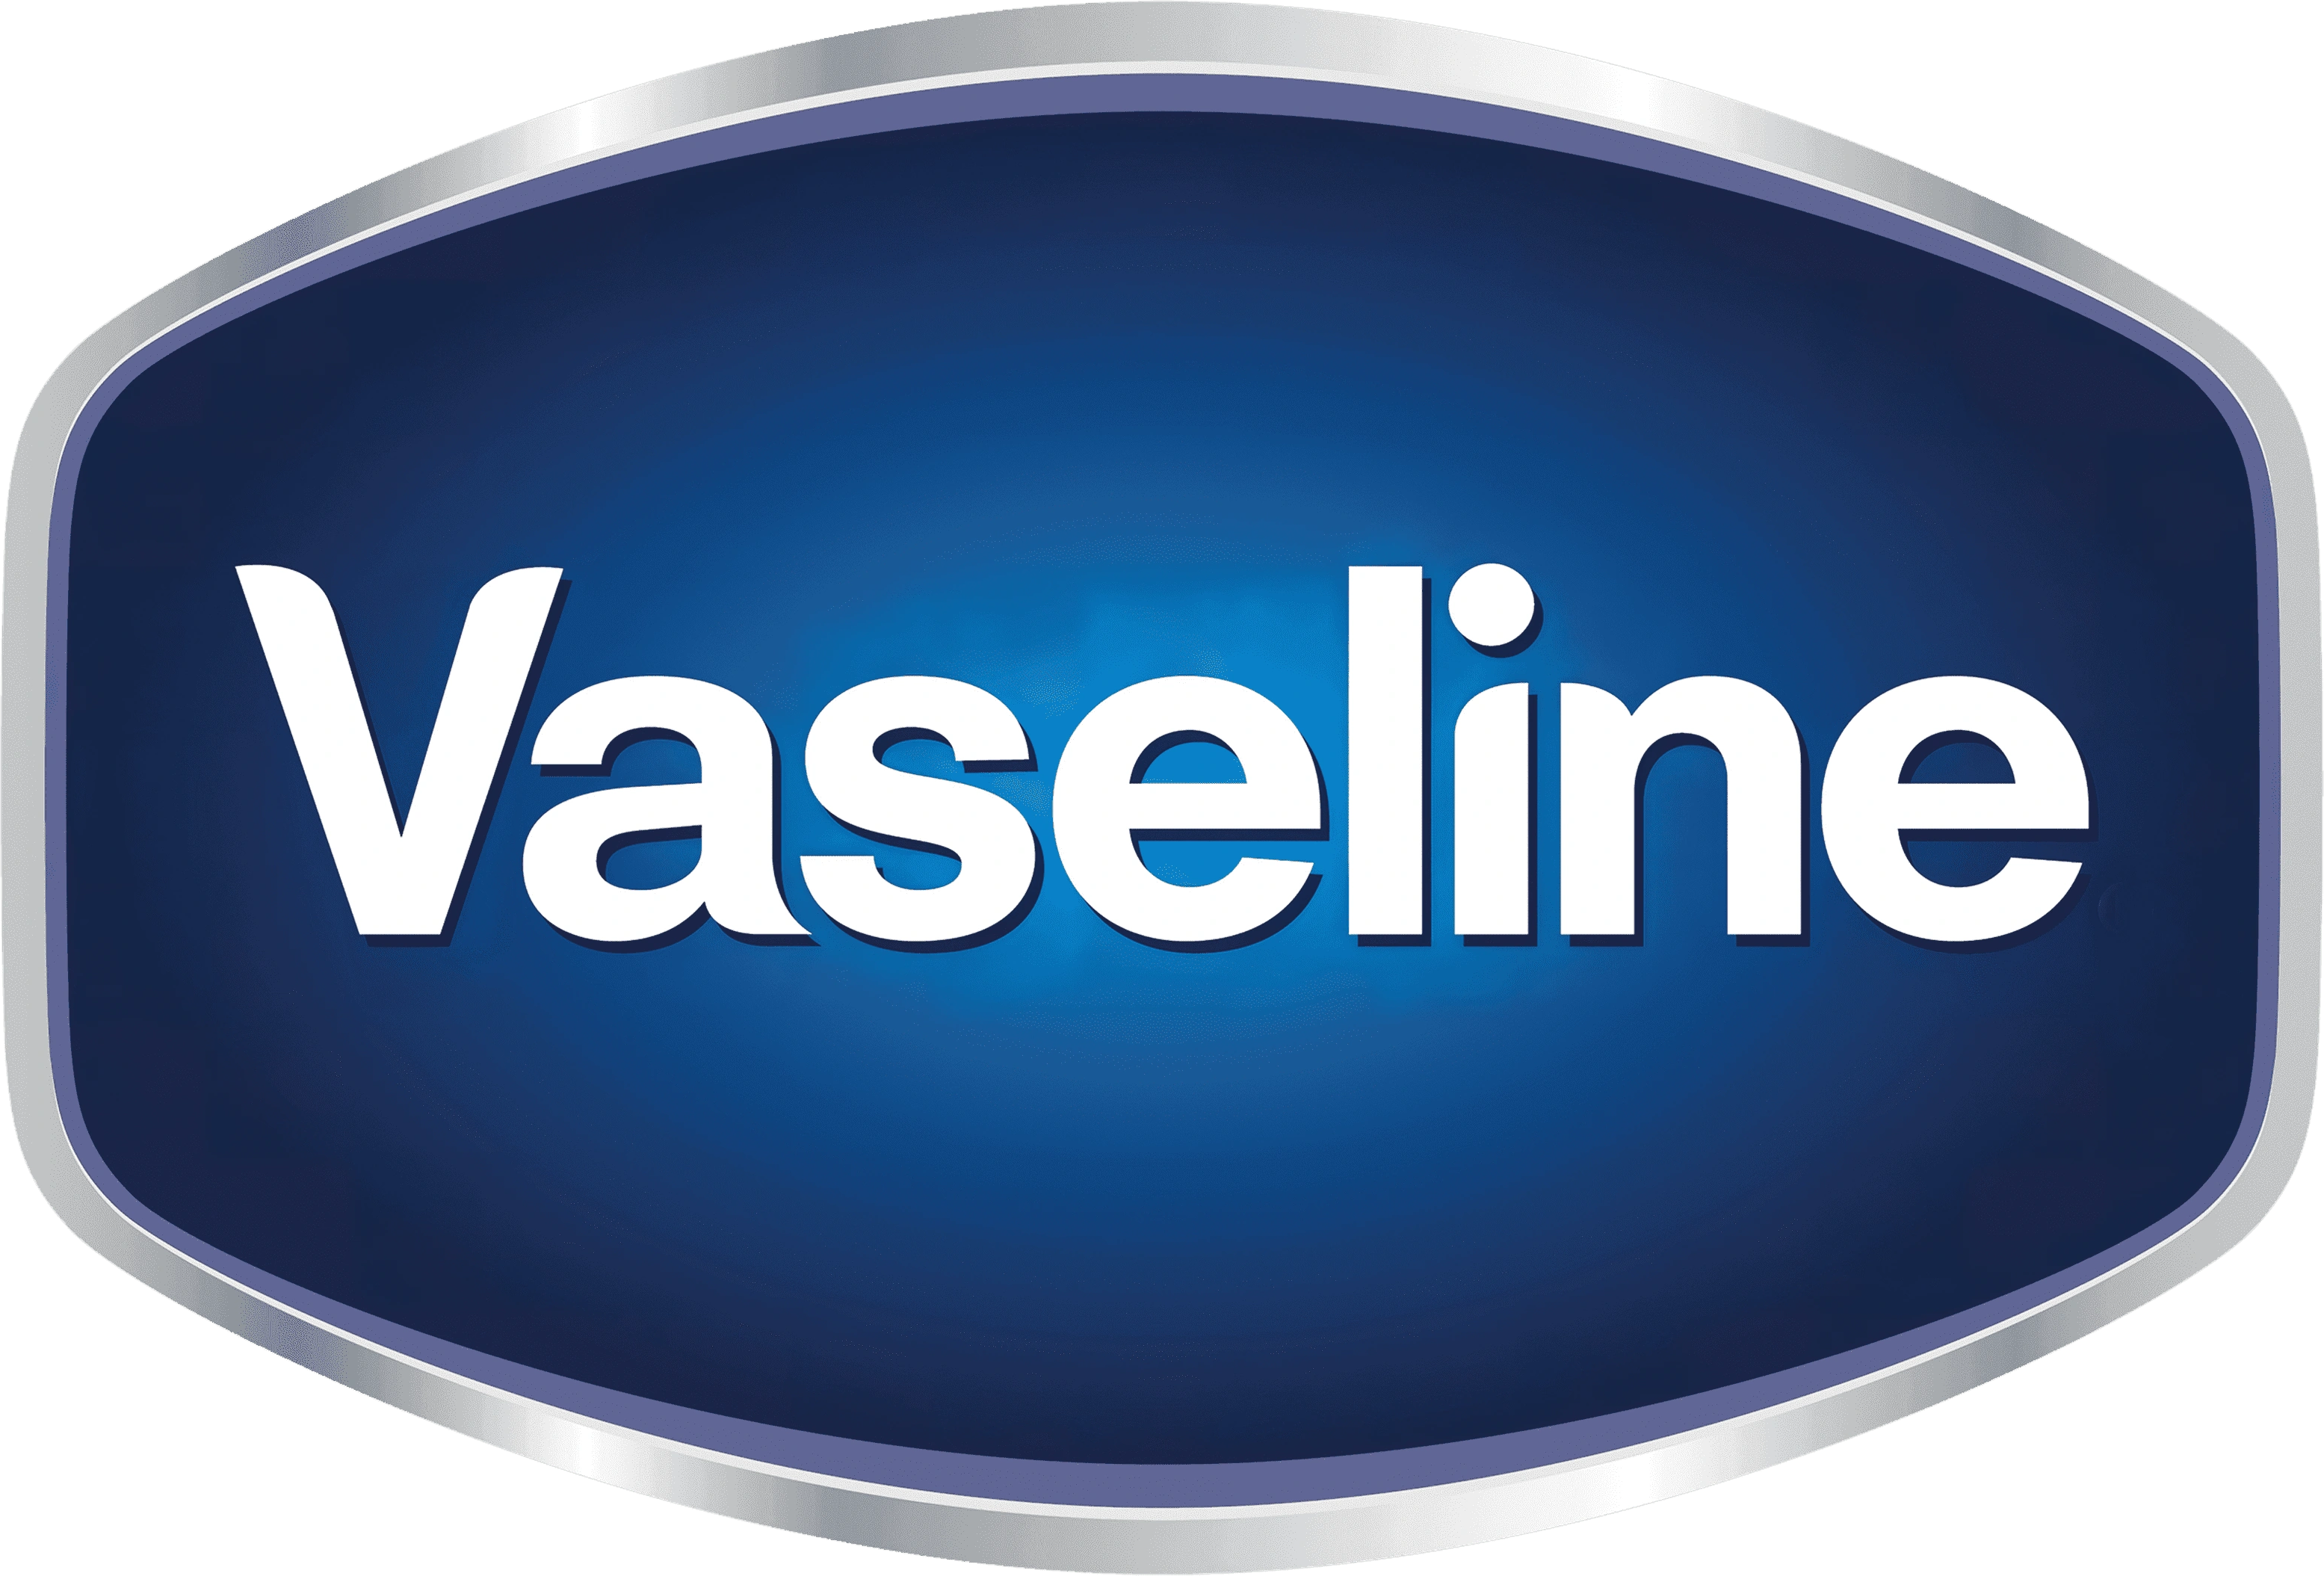 Vaseline new logo